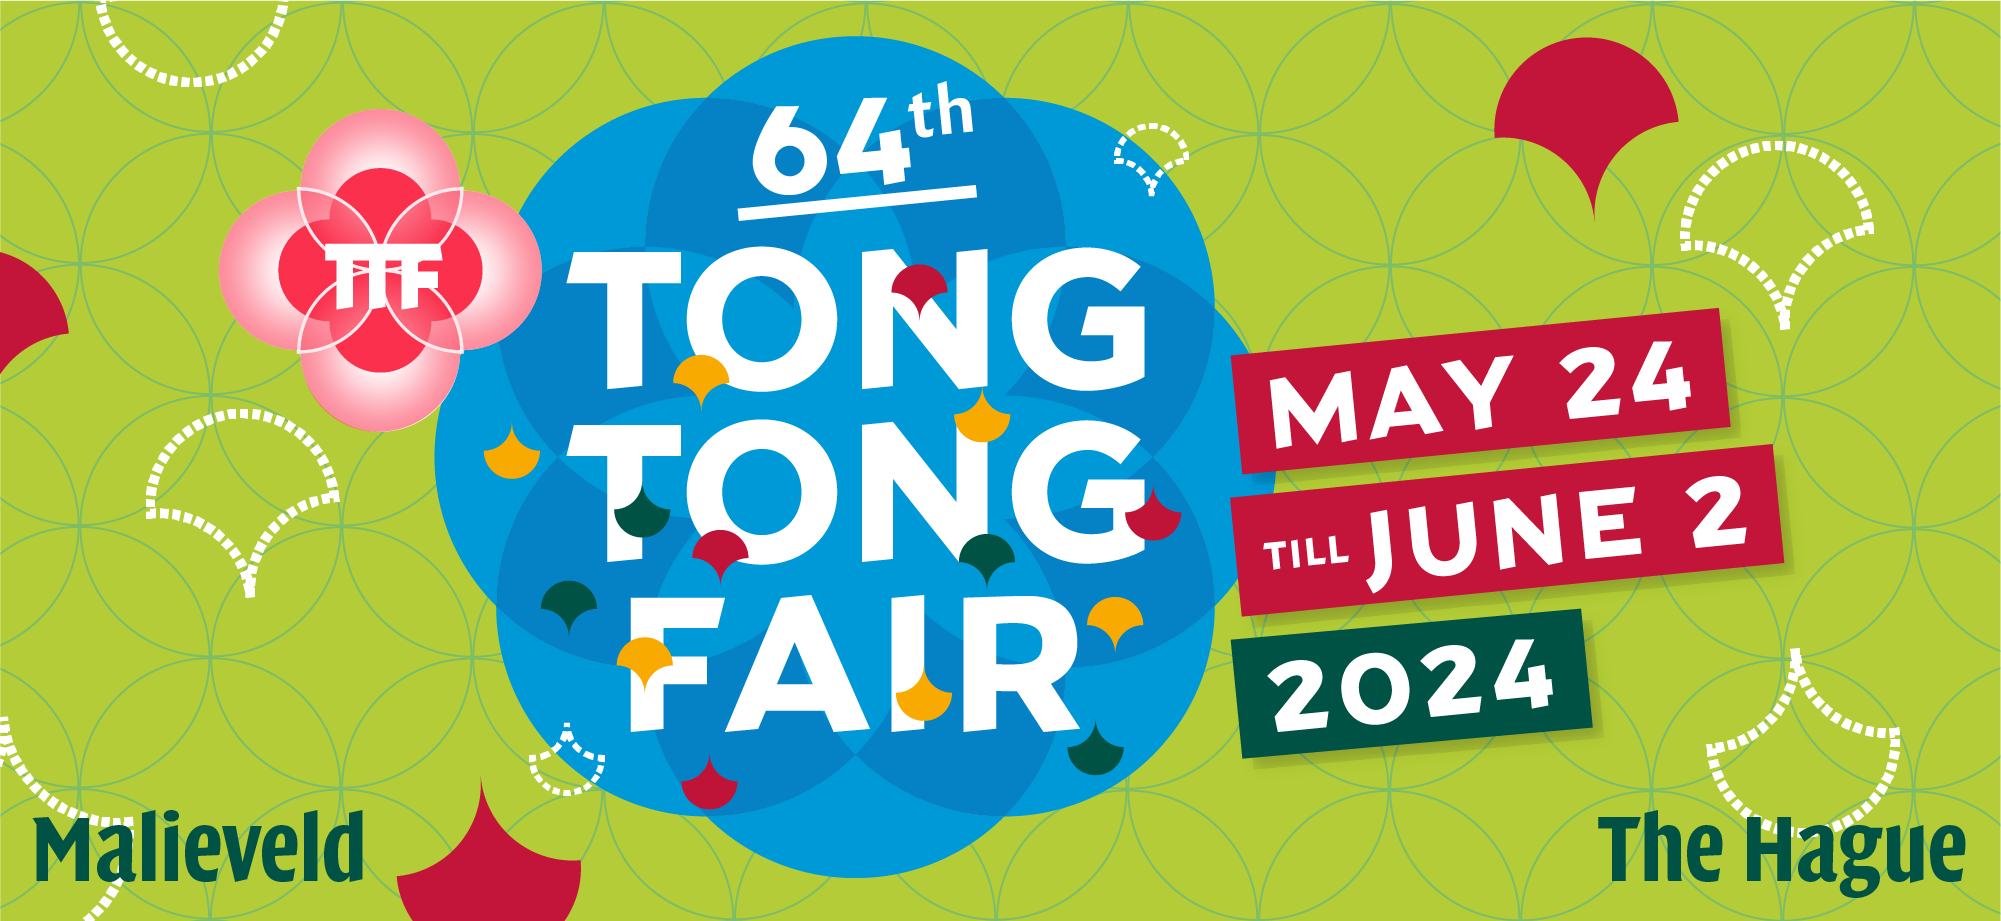 64th Tong Tong Fair - May 24 till June 2, 2024 - Malieveld, The Hague